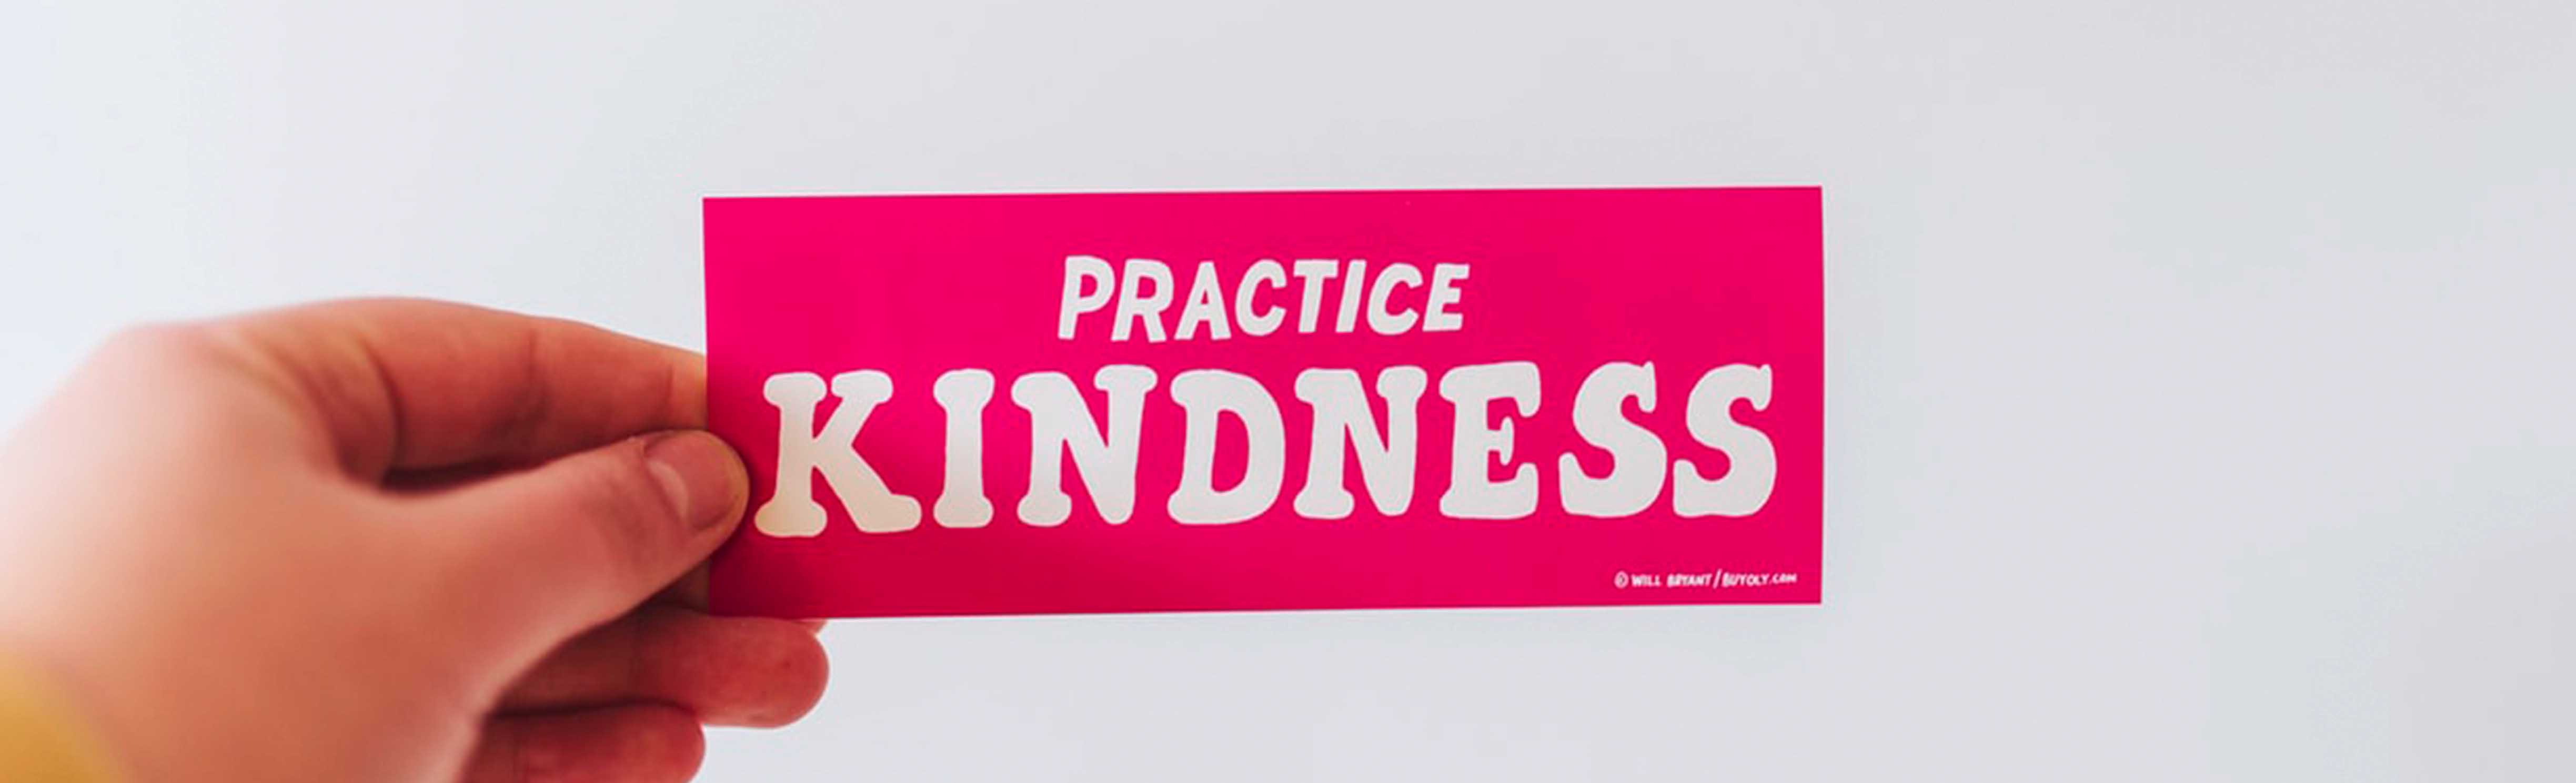 Practice kindness